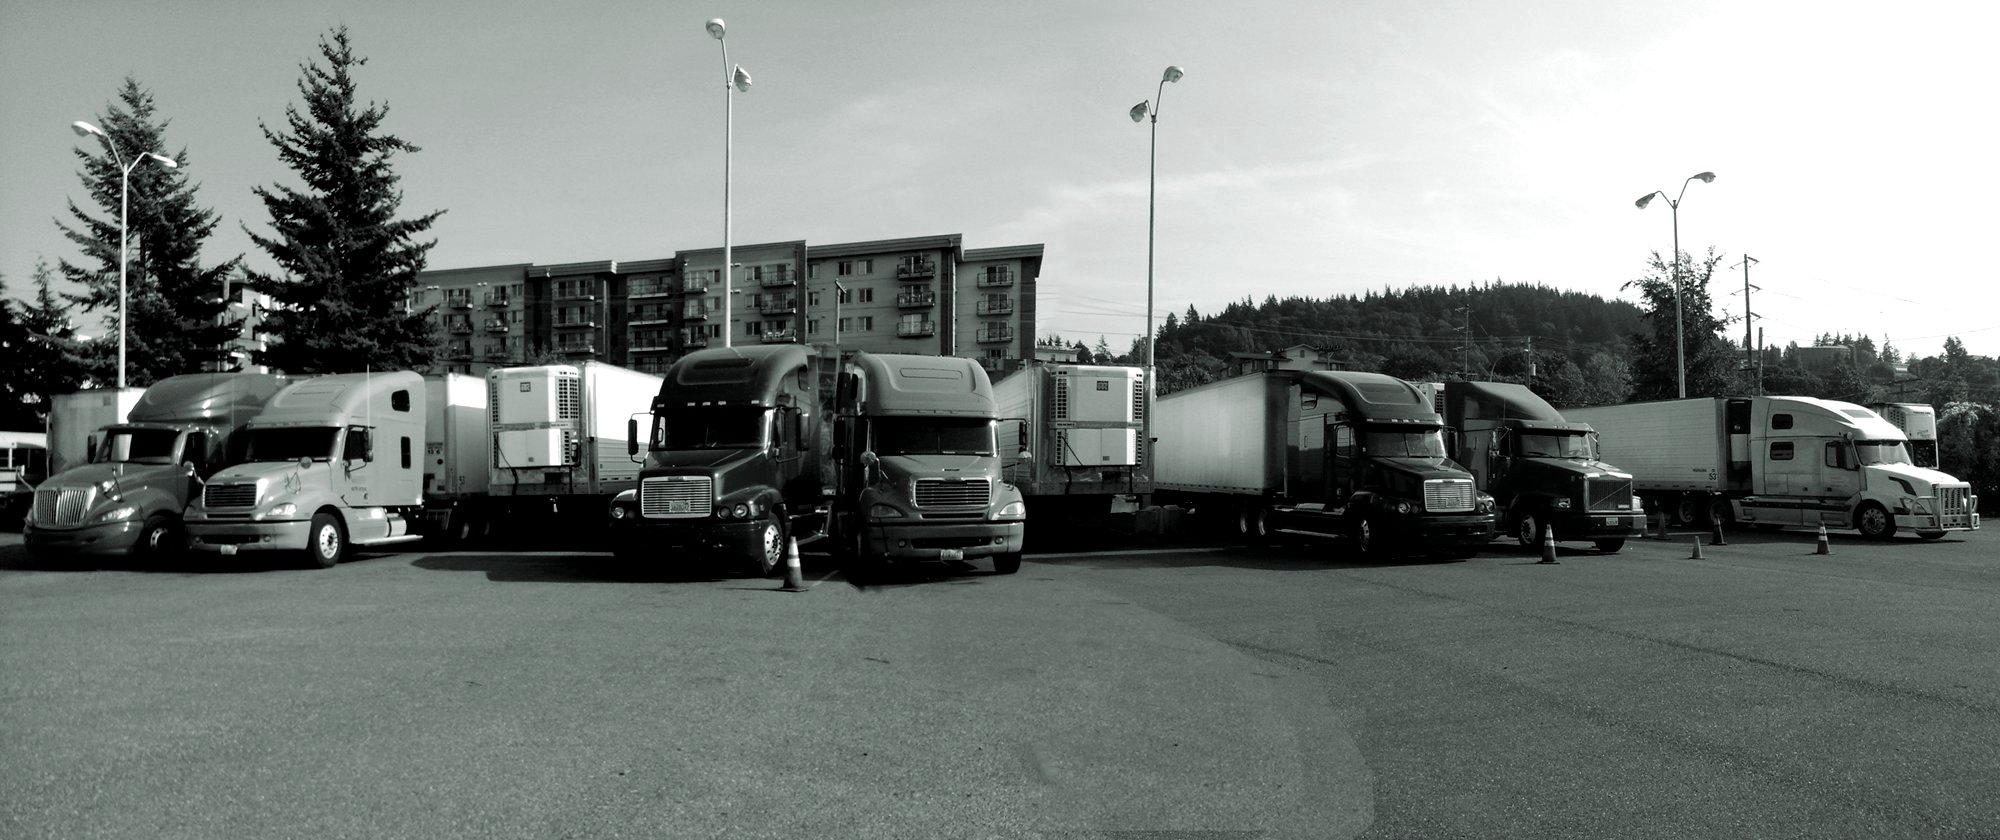 Panorama of heavy-dutytrucks in truck yard